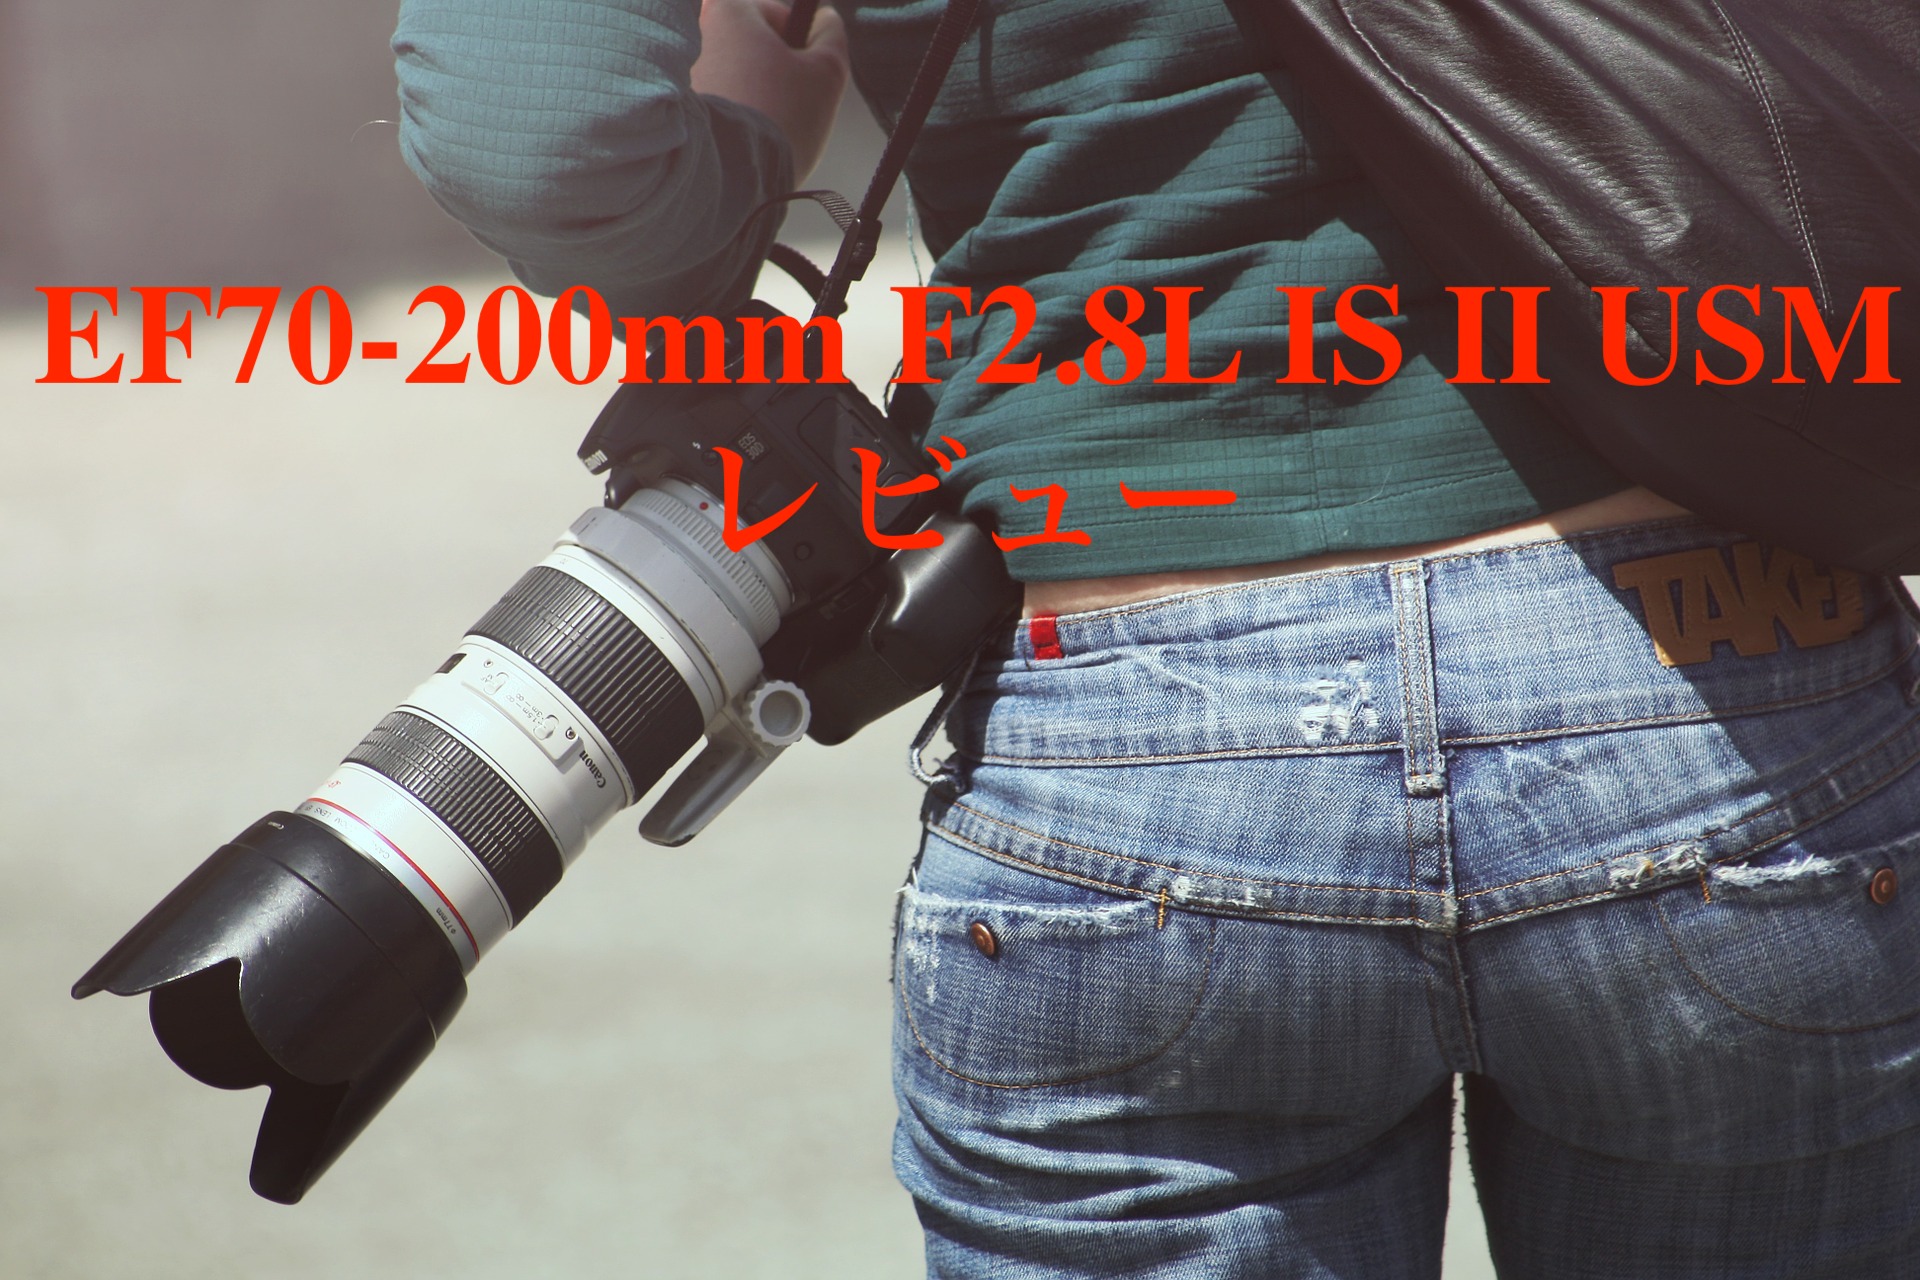 Canon 望遠レンズ EF70-200mm F2.8L IS II USM888mm×199mm